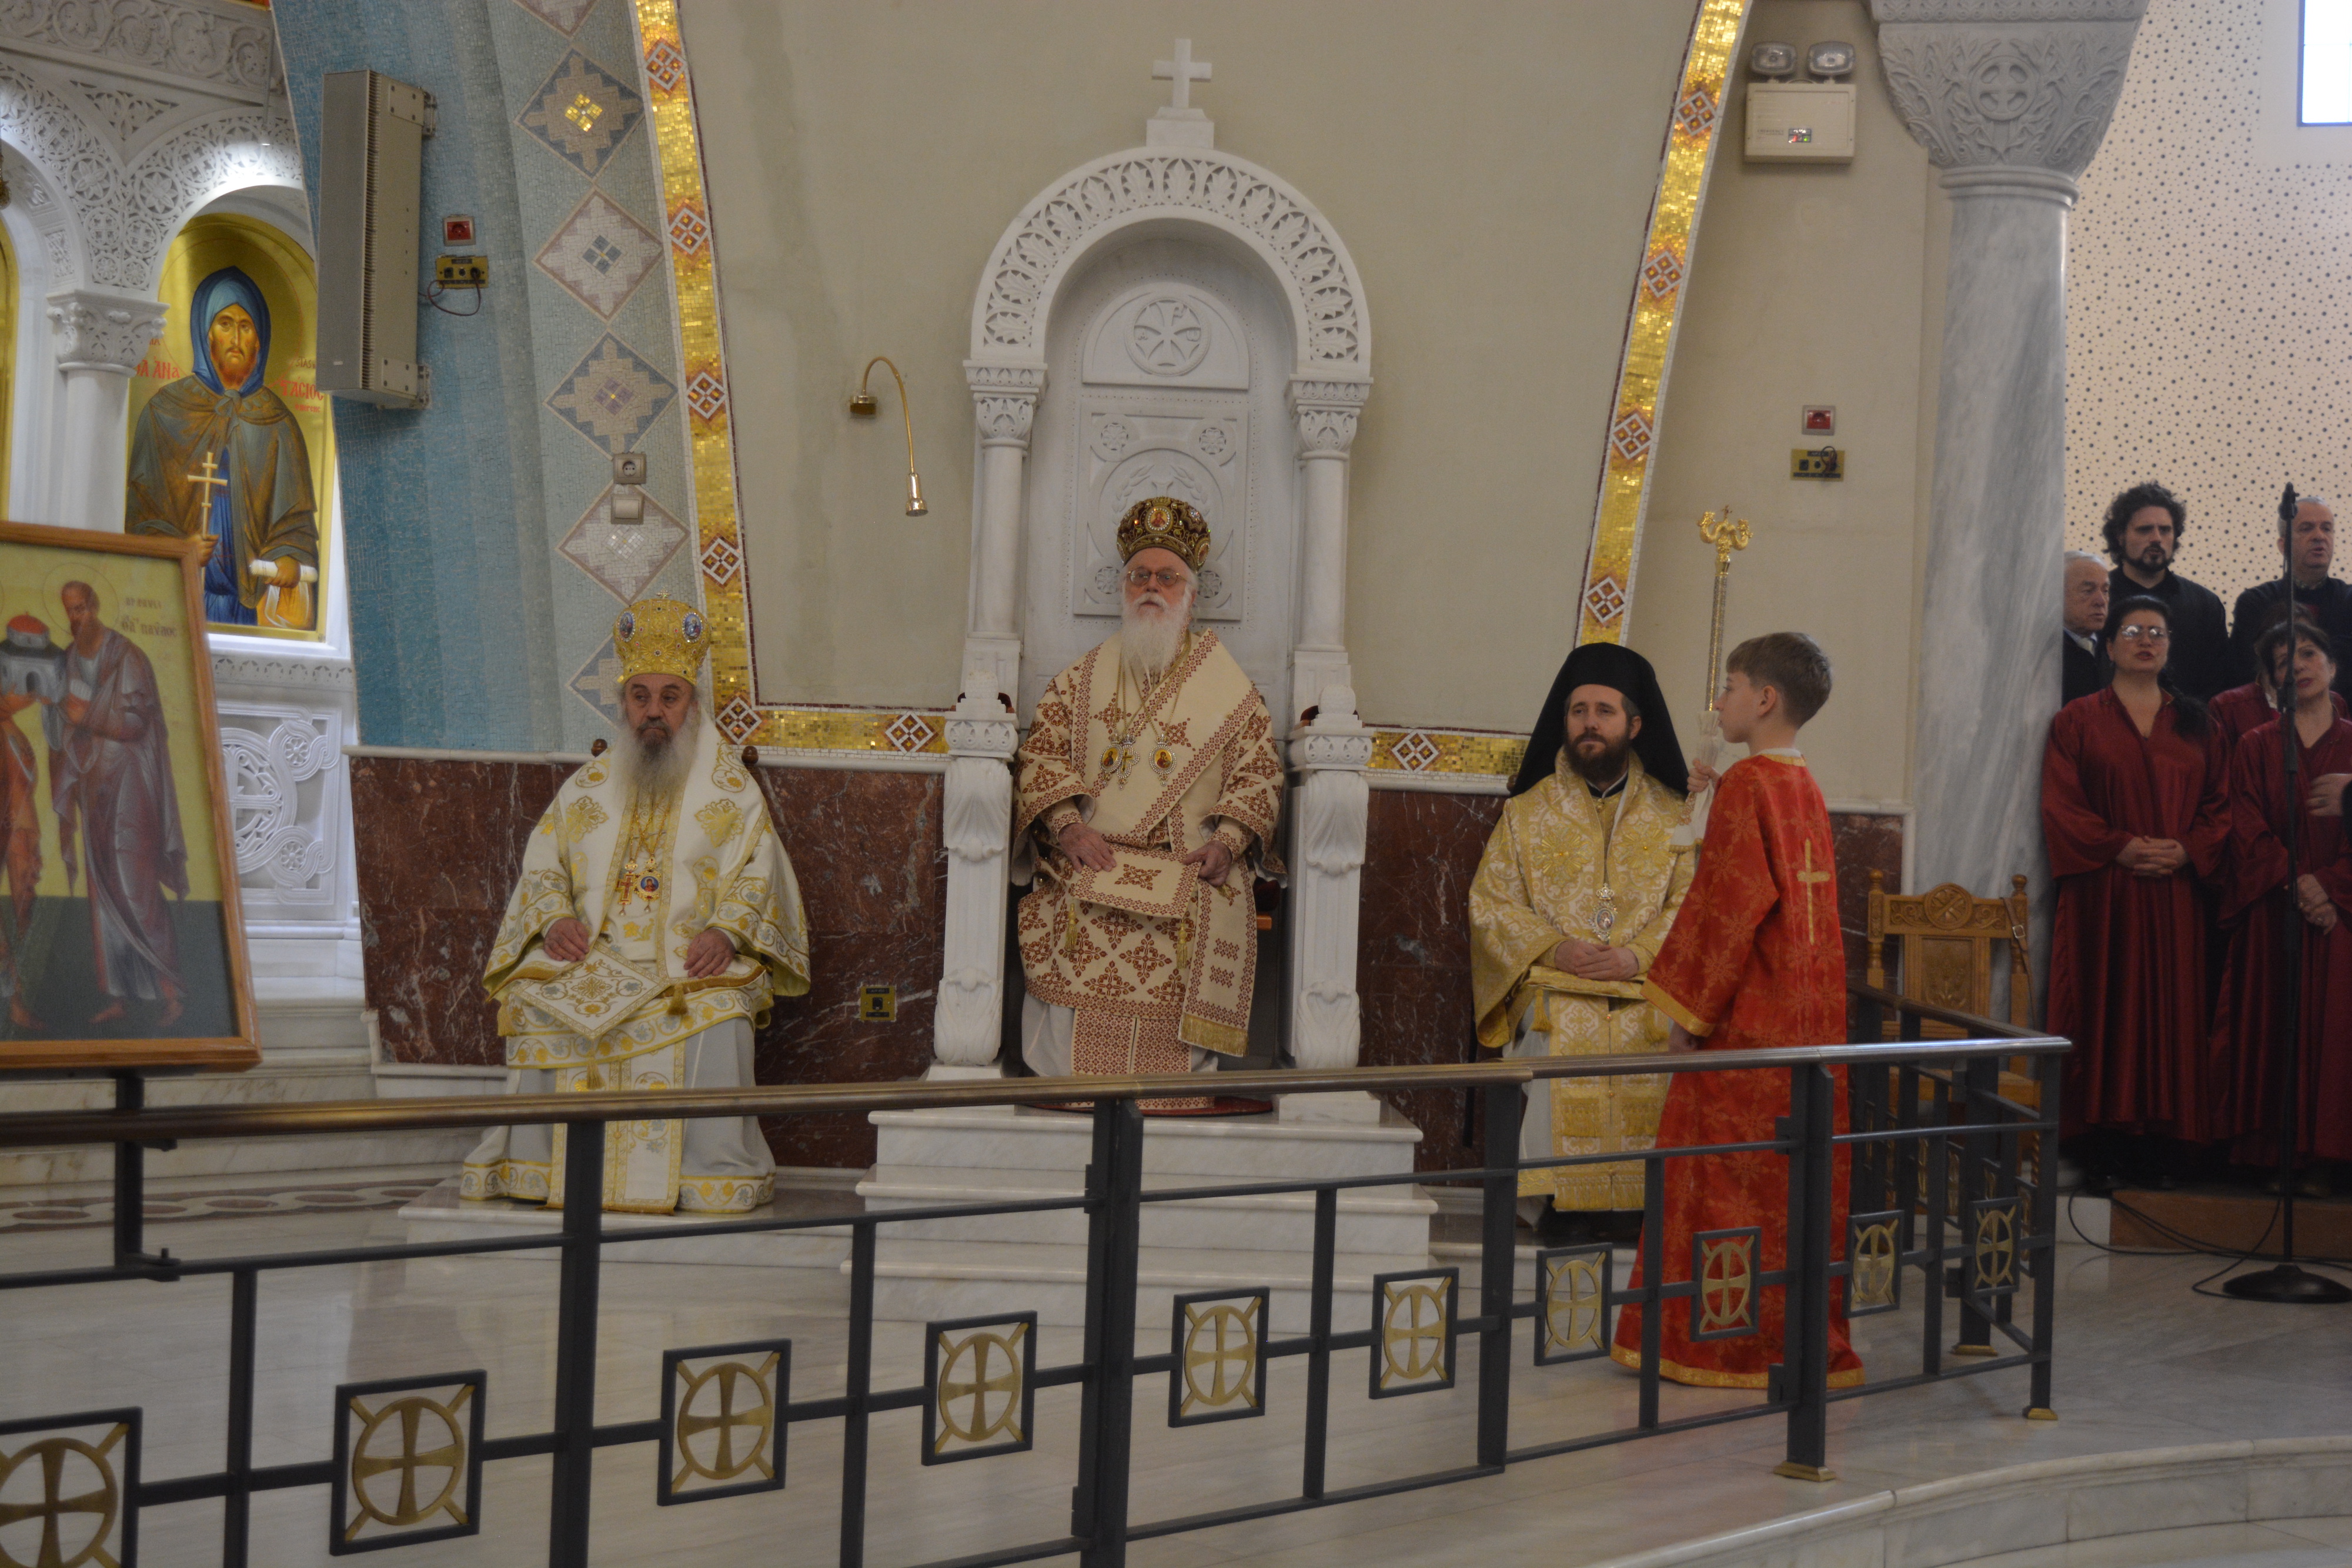 Archbishop Anastasios with Metropolitan Nathanael, Bishop Asti - and Daniel Hoppe as altar server